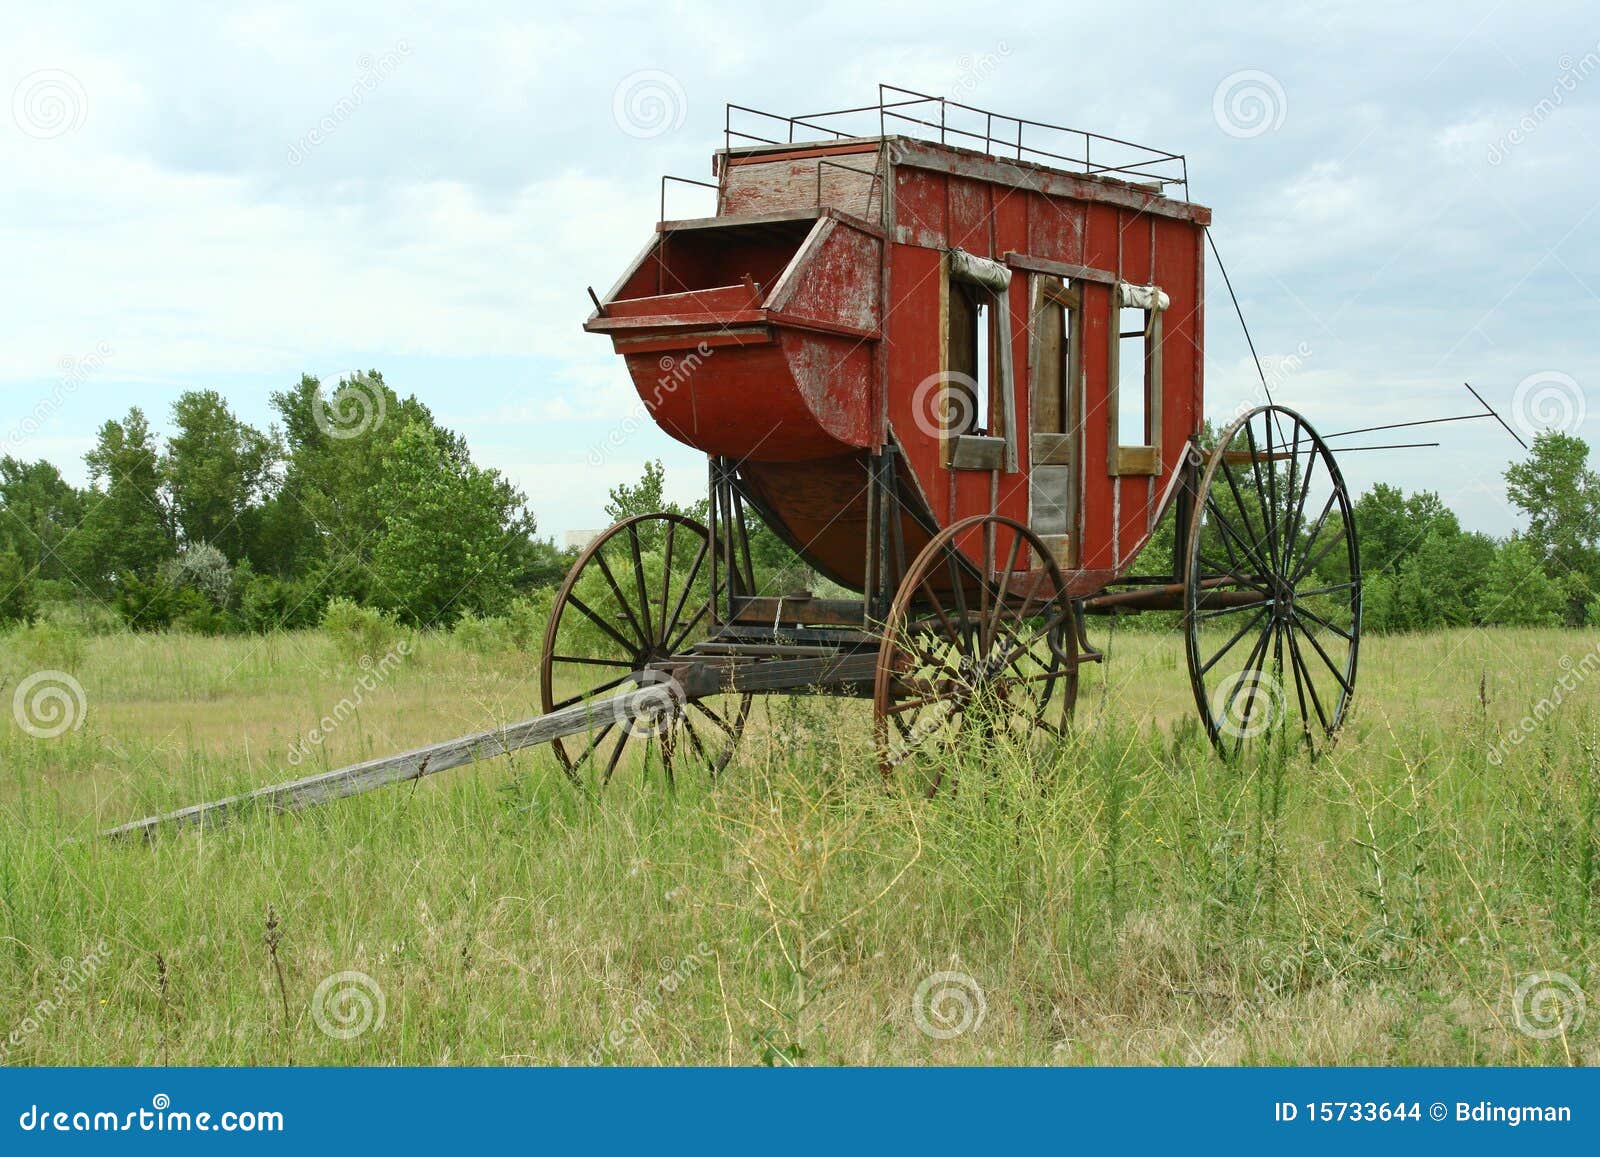 western stagecoach